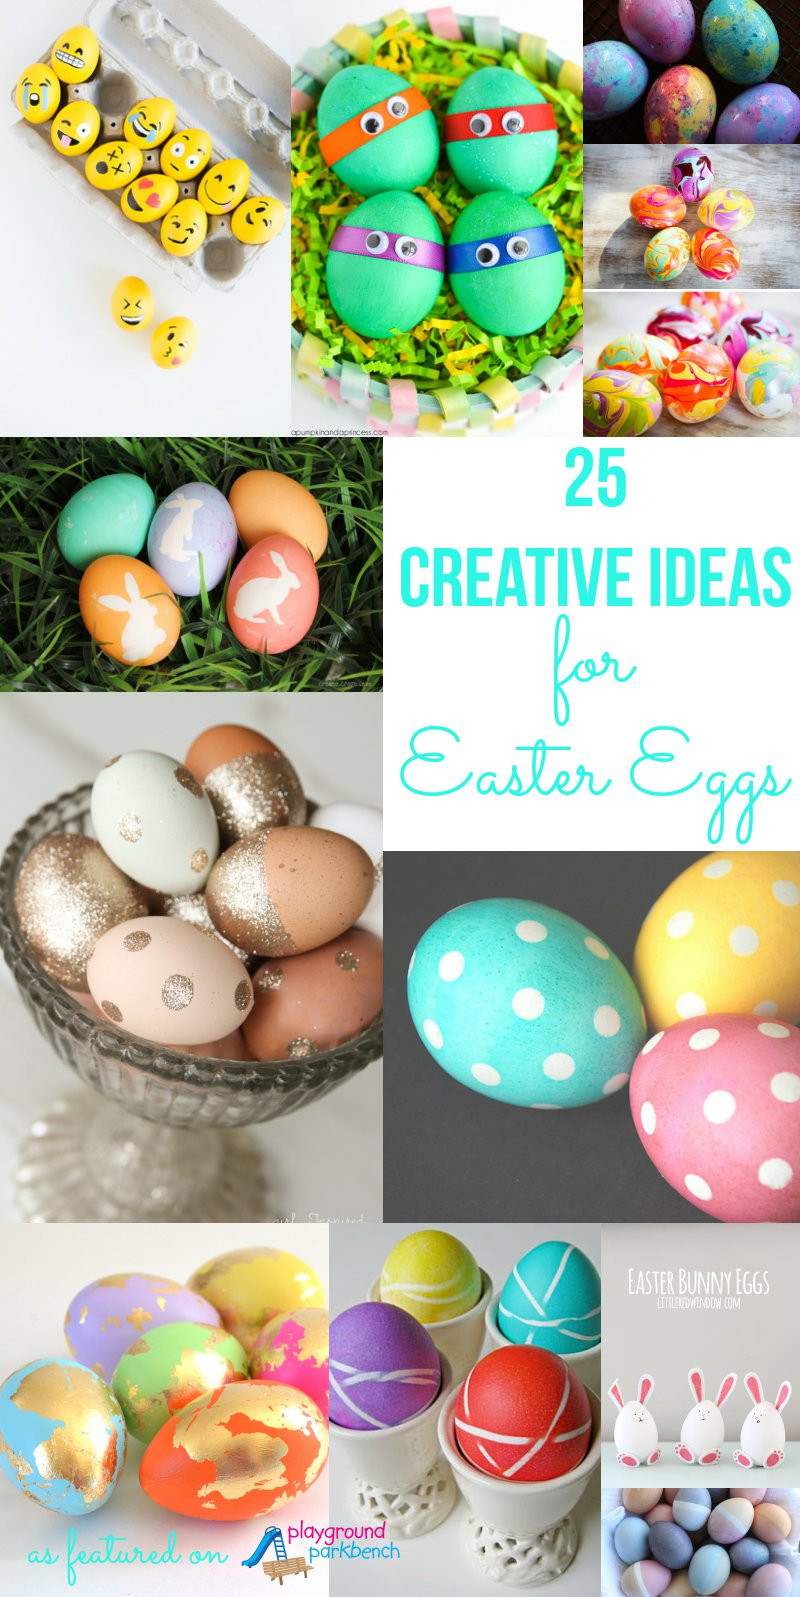 Creative Easter Egg Ideas
 25 Creative Ideas for Decorating Easter Eggs